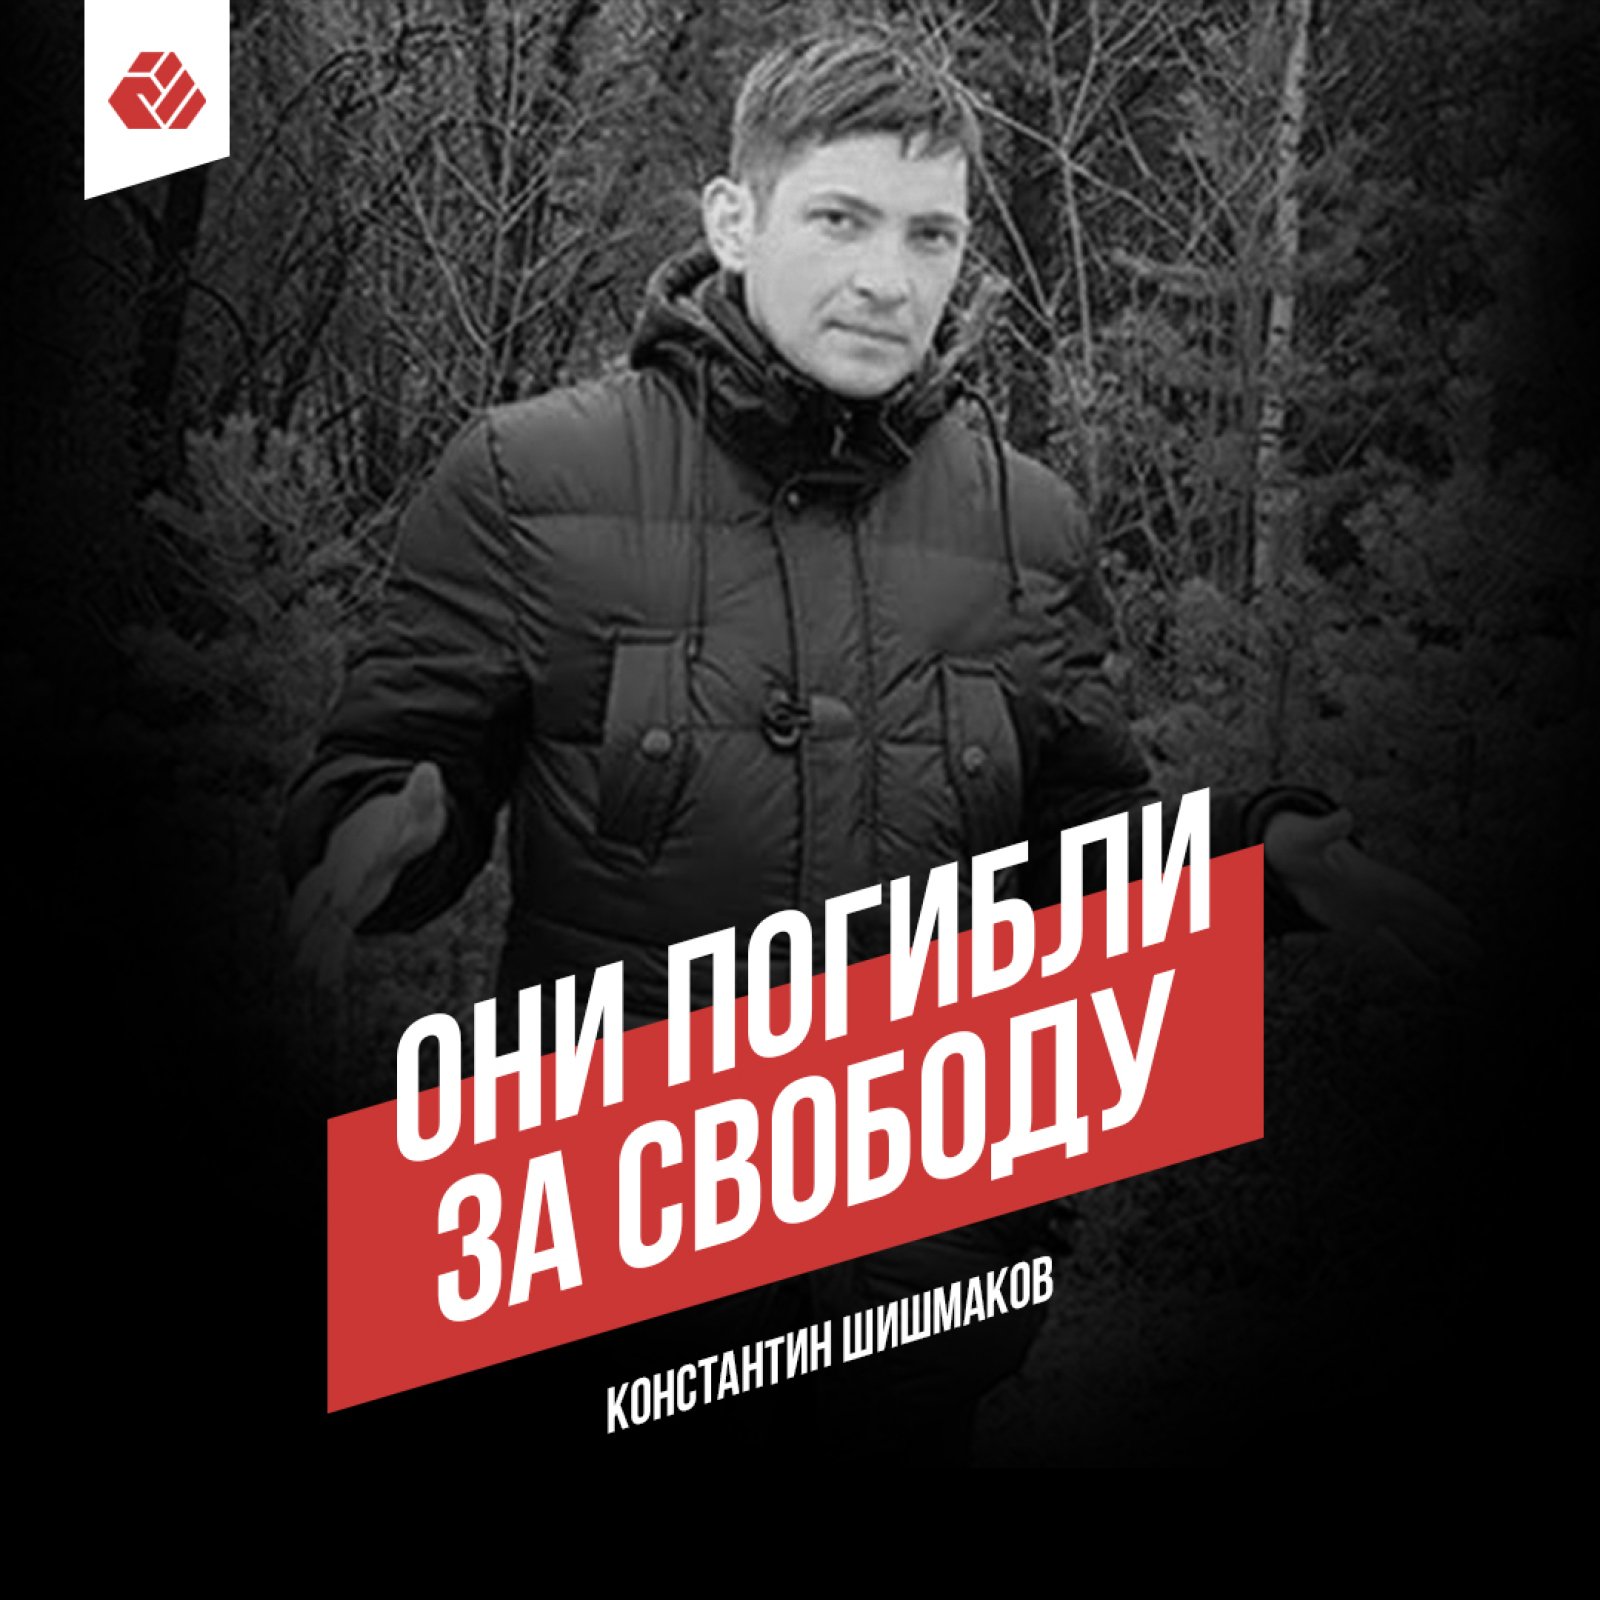 Konstantin Shishmakov - the sixth victim of August 2020